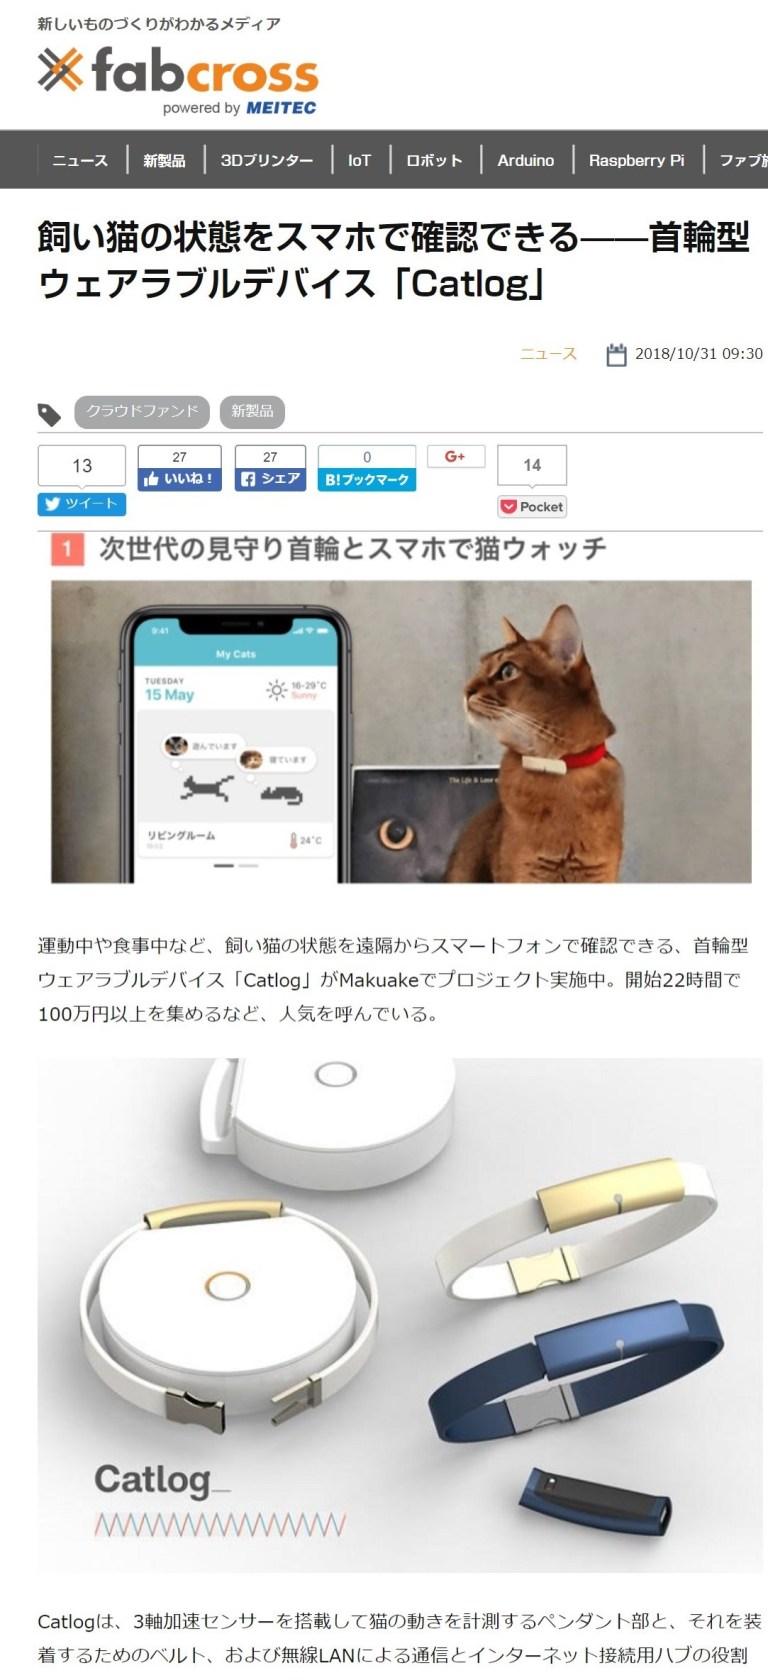 screencapture-fabcross-jp-news-2018-20181031 catwearabledevice catlog-html-2018-12-17-14 35 17